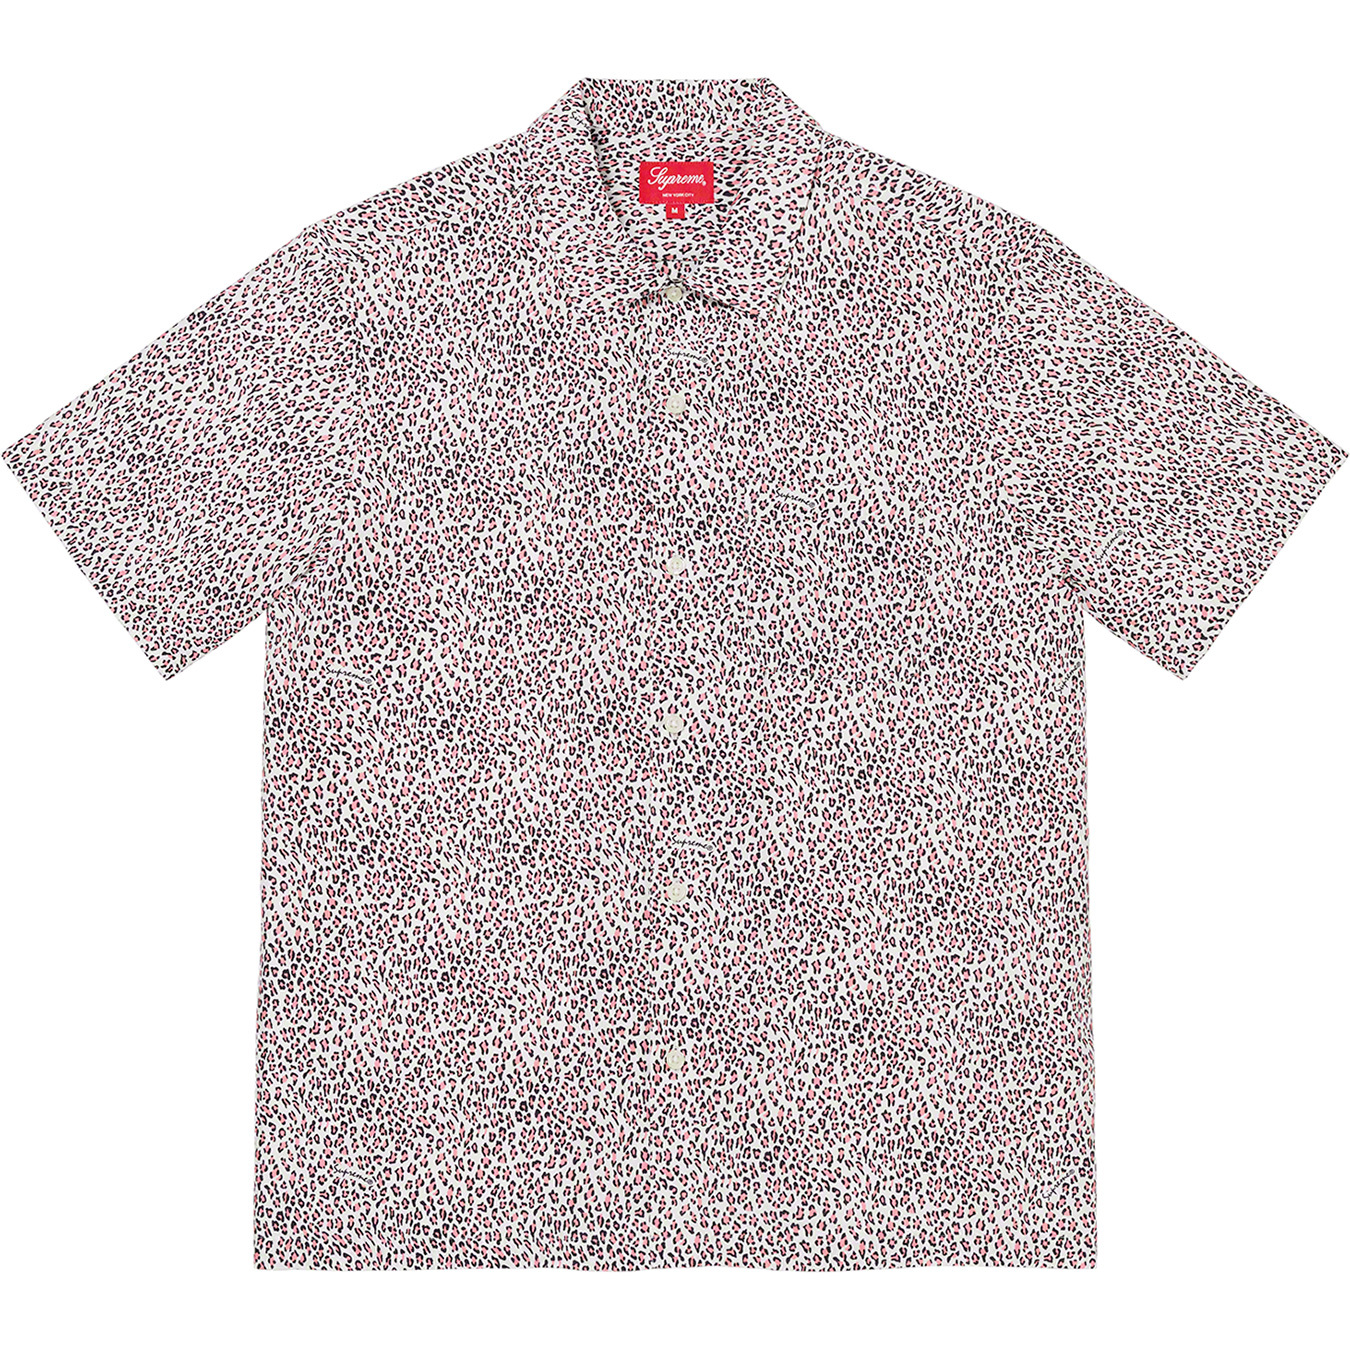 Leopard Silk S S Shirt - spring summer 2022 - Supreme